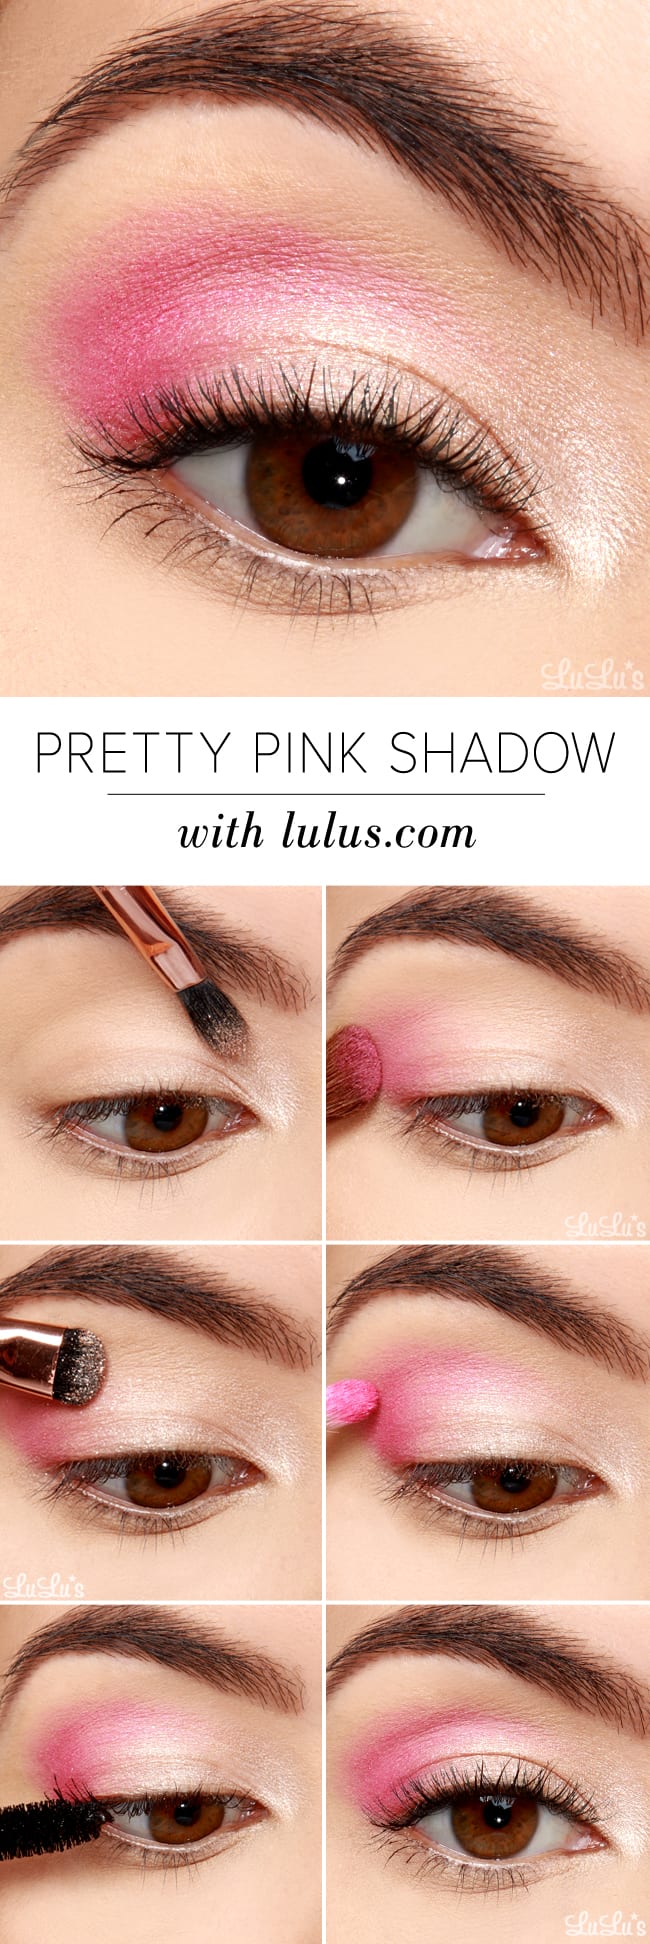 Lulus Pretty Pink Eyeshadow Tutorial - Lulus.com Fashion